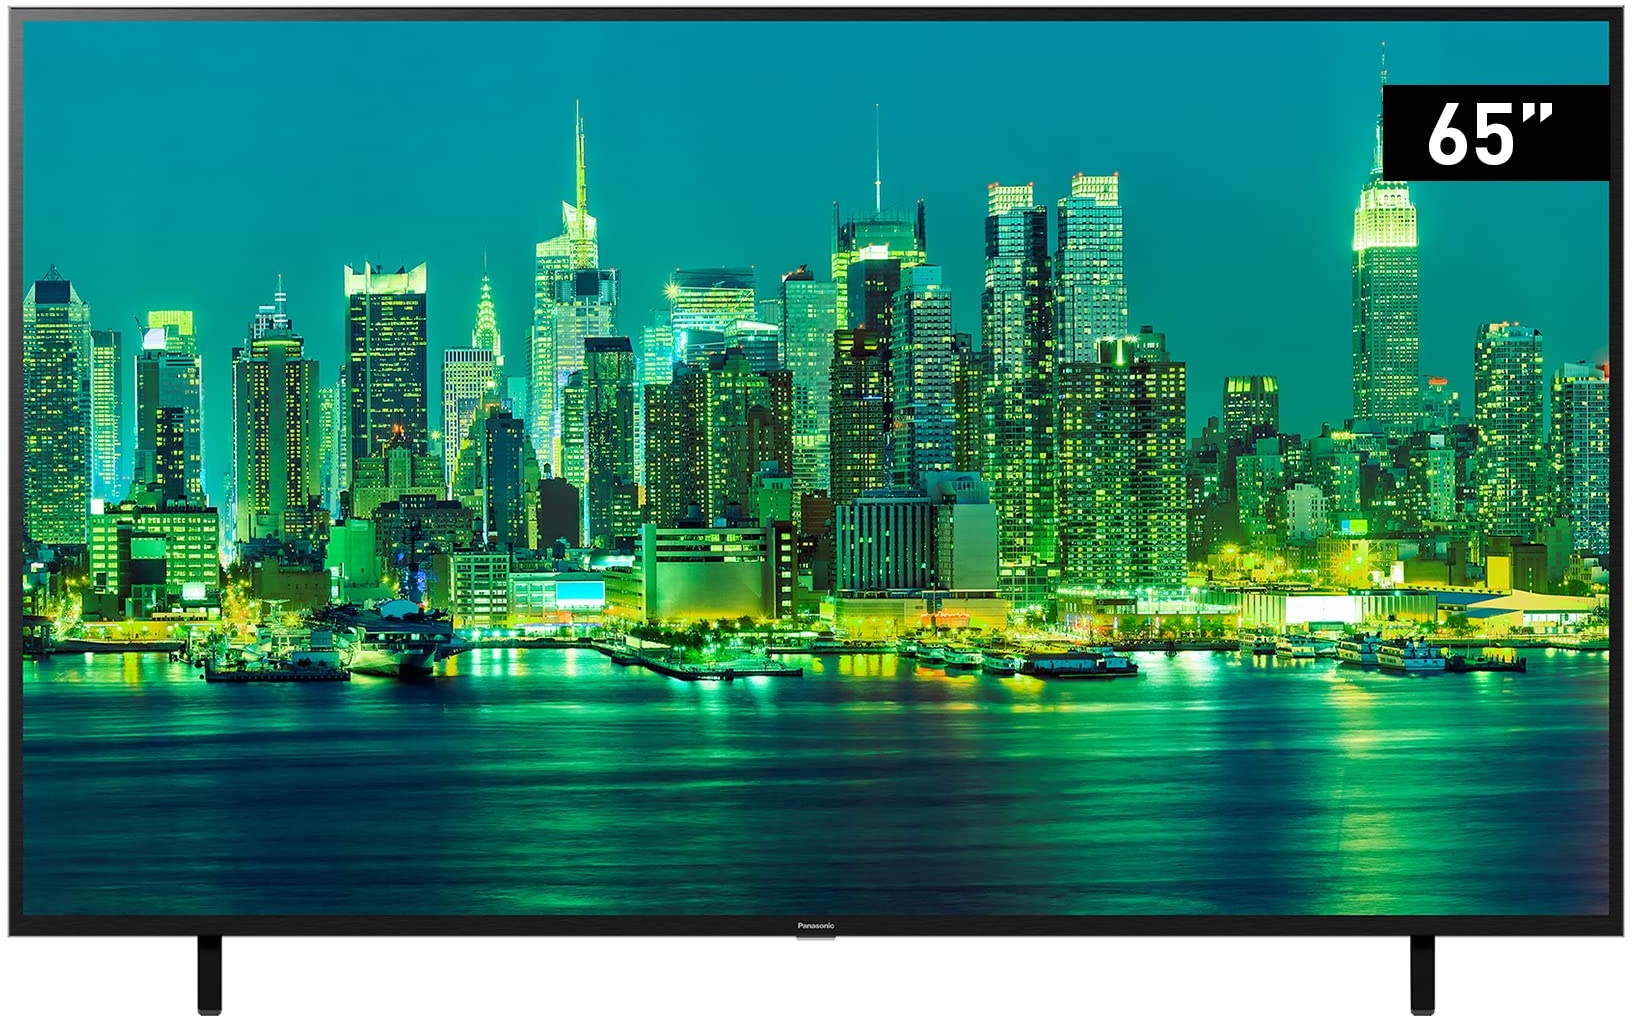 Panasonic TX-65LXW704 164 cm LED Fernseher (65 Zoll, HDR Bright Panel, 4K Ultra HD, Triple Tuner, HDMI, USB, Smart TV), schwarz